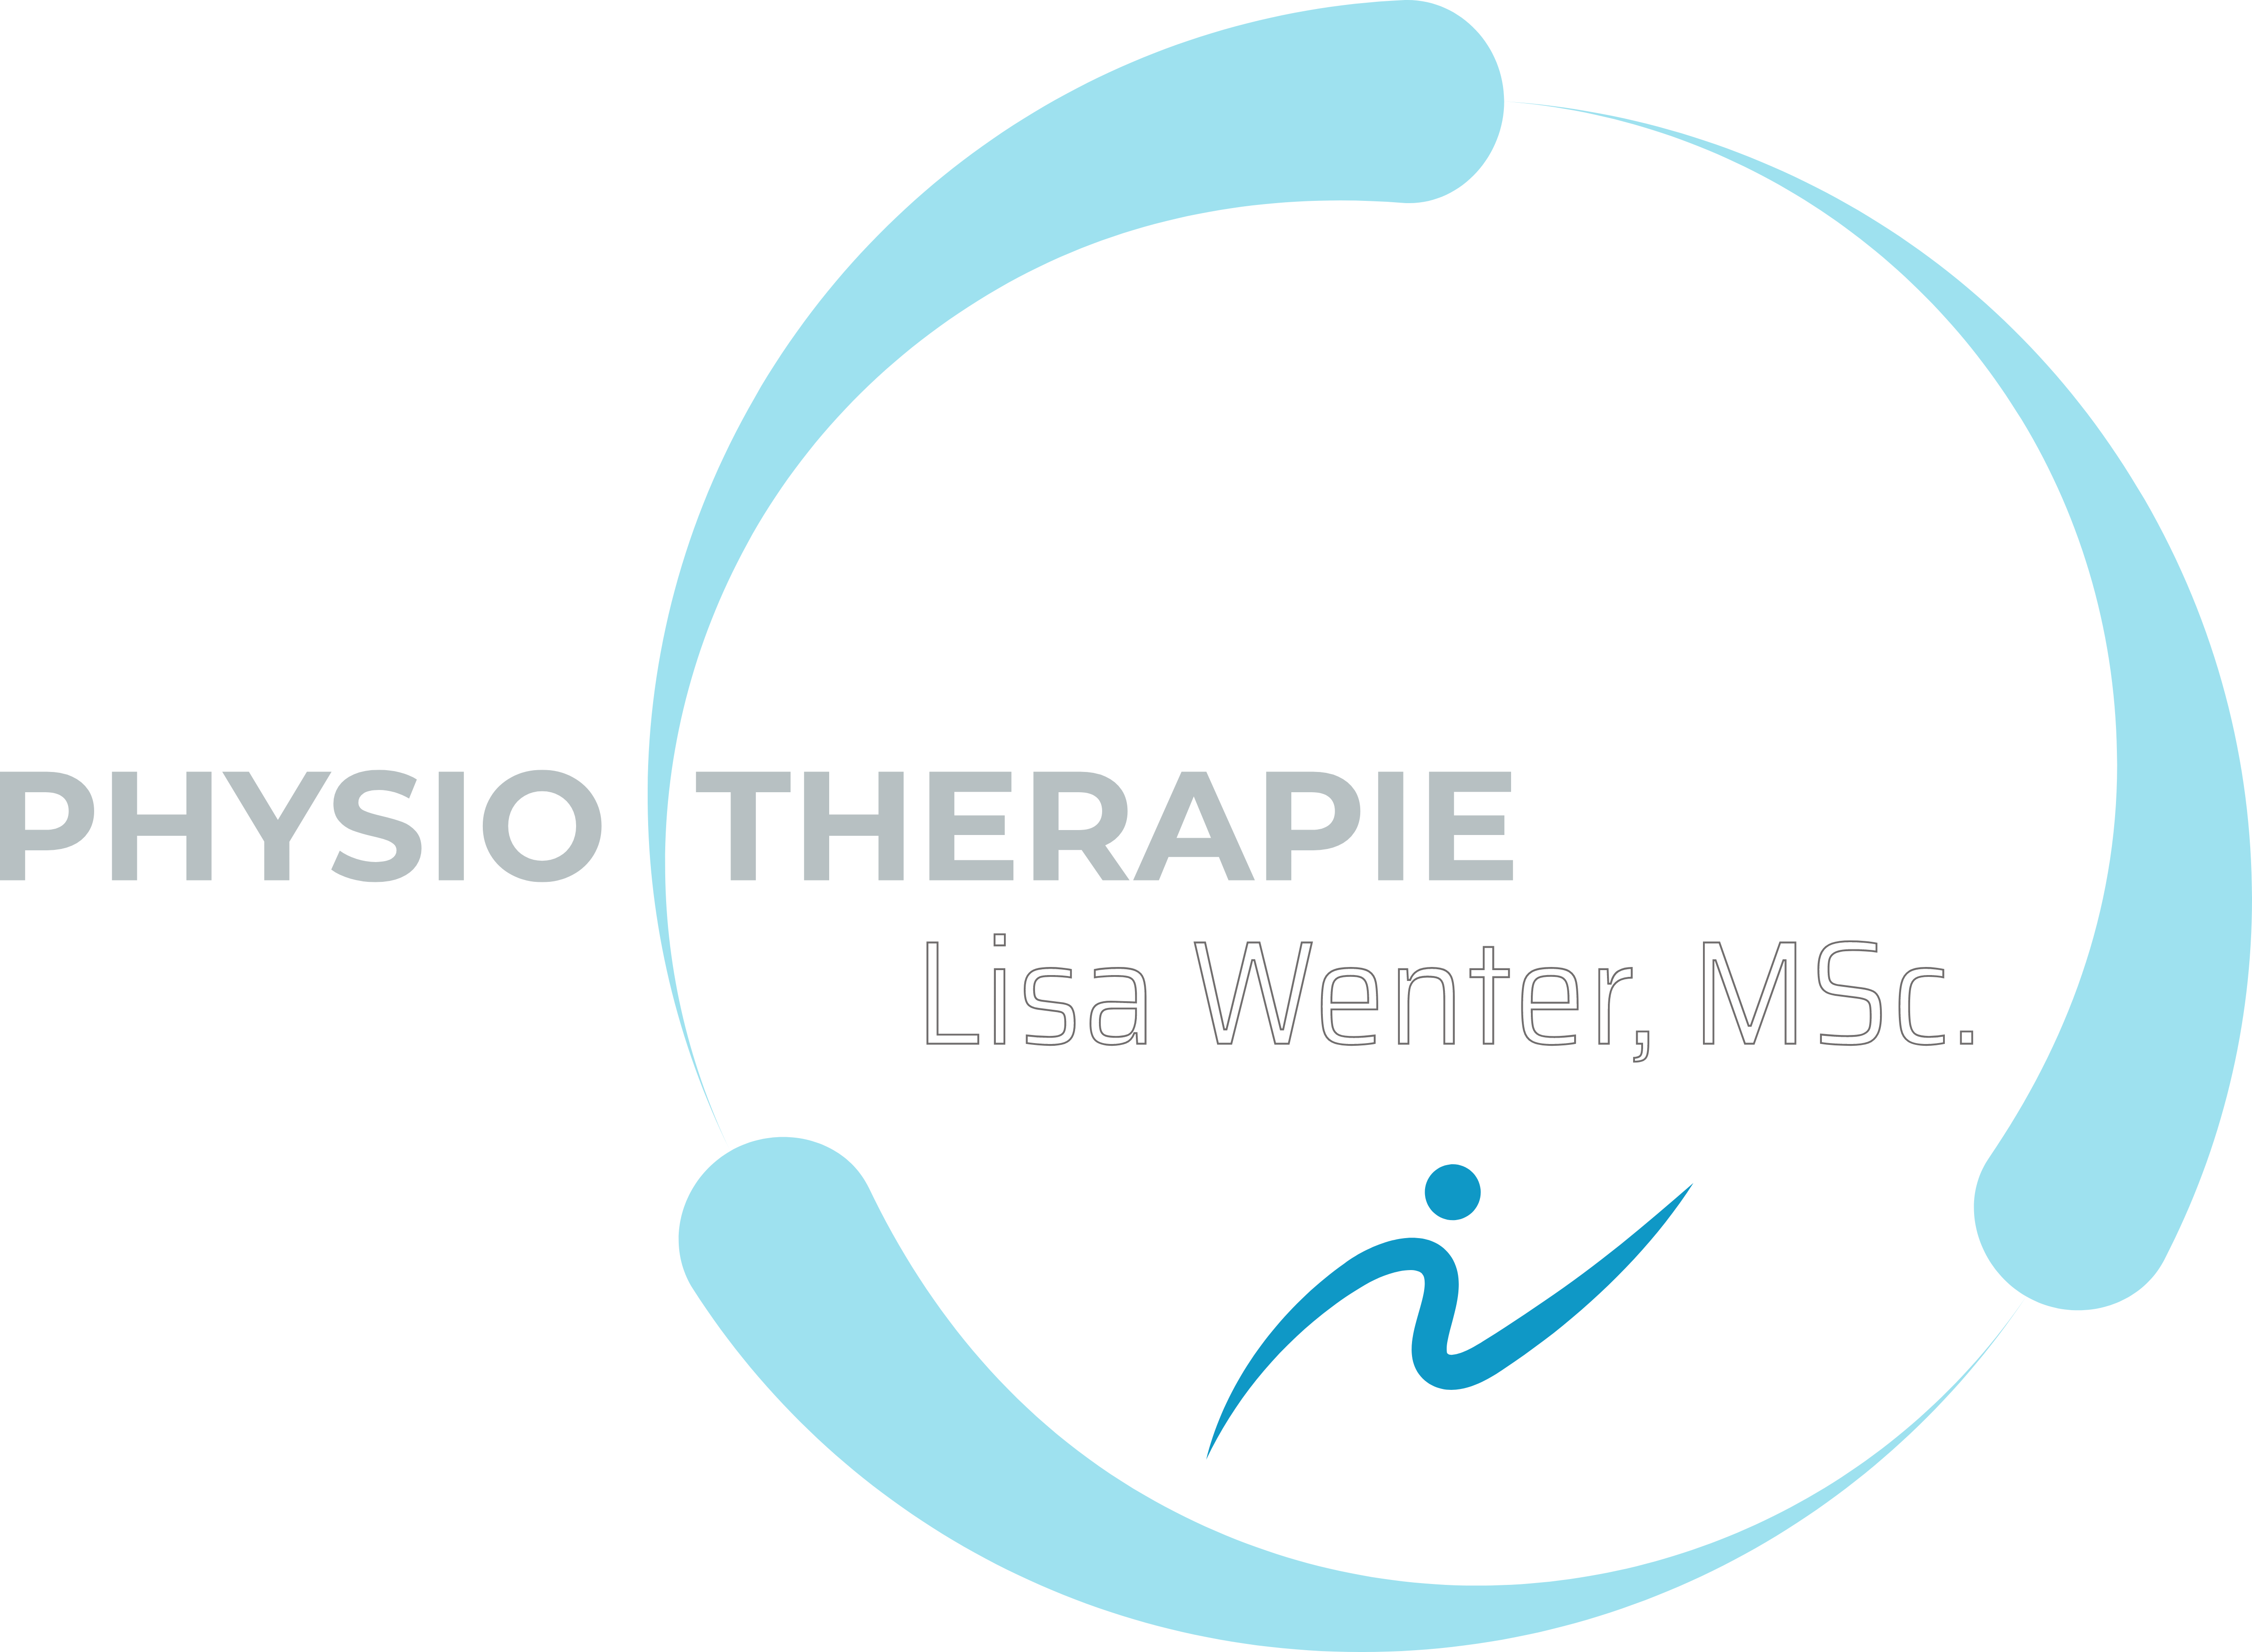 Physiotherapie - Lisa Wenter, MSc.